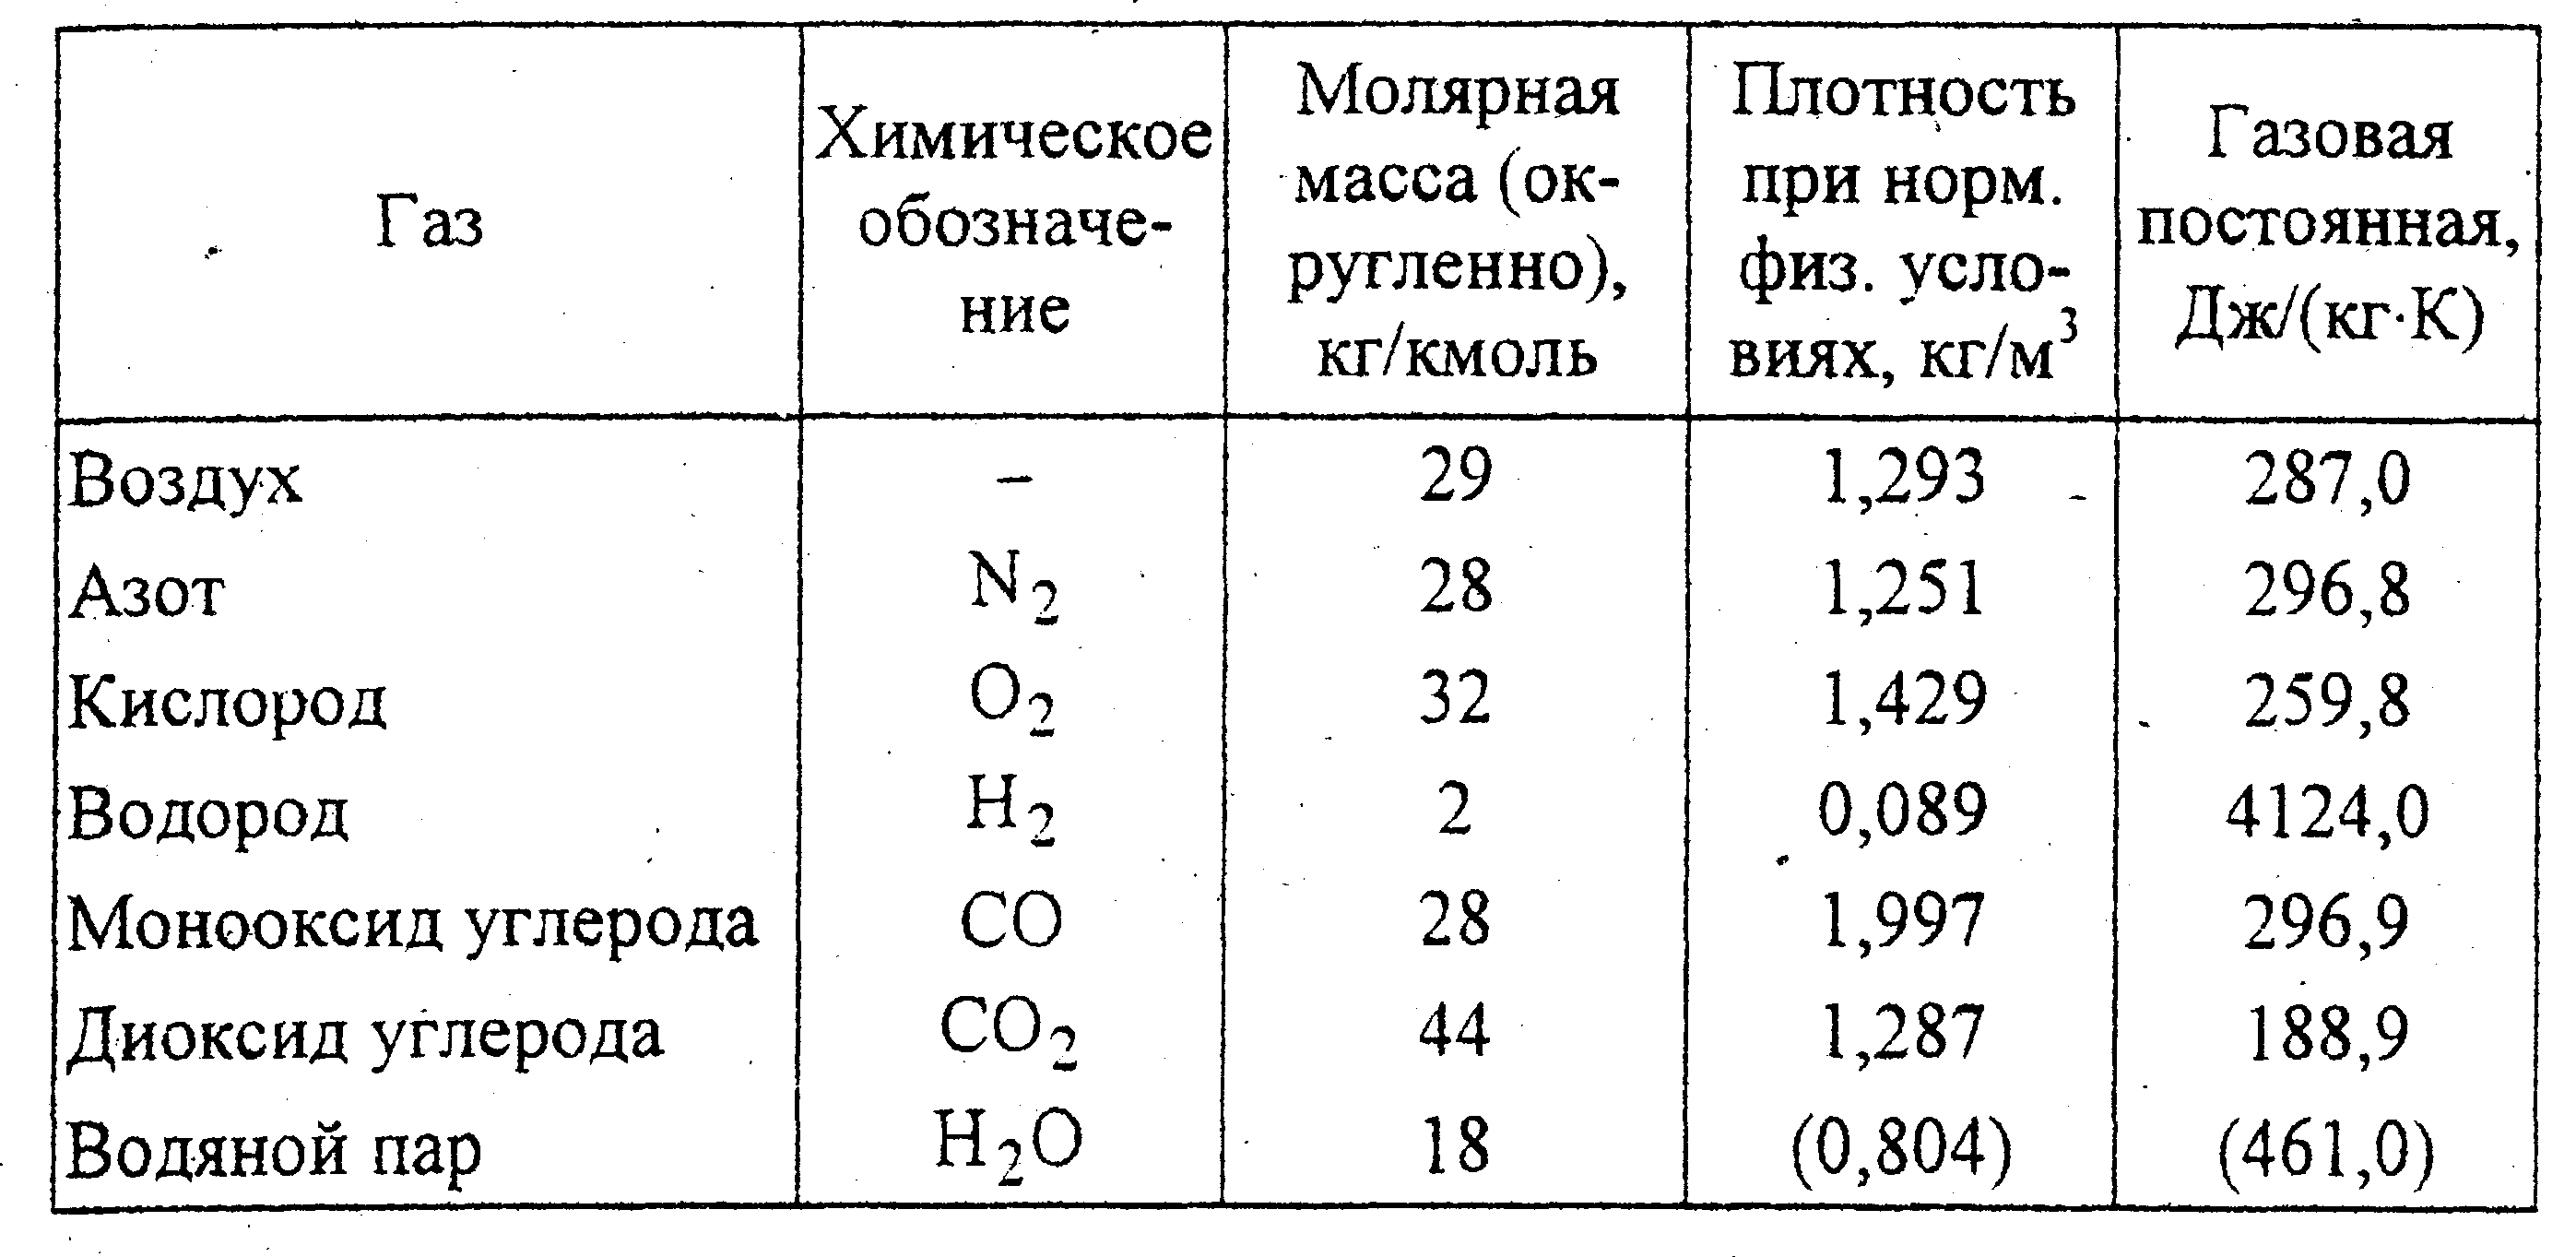 Оксид азота 1 молярная масса